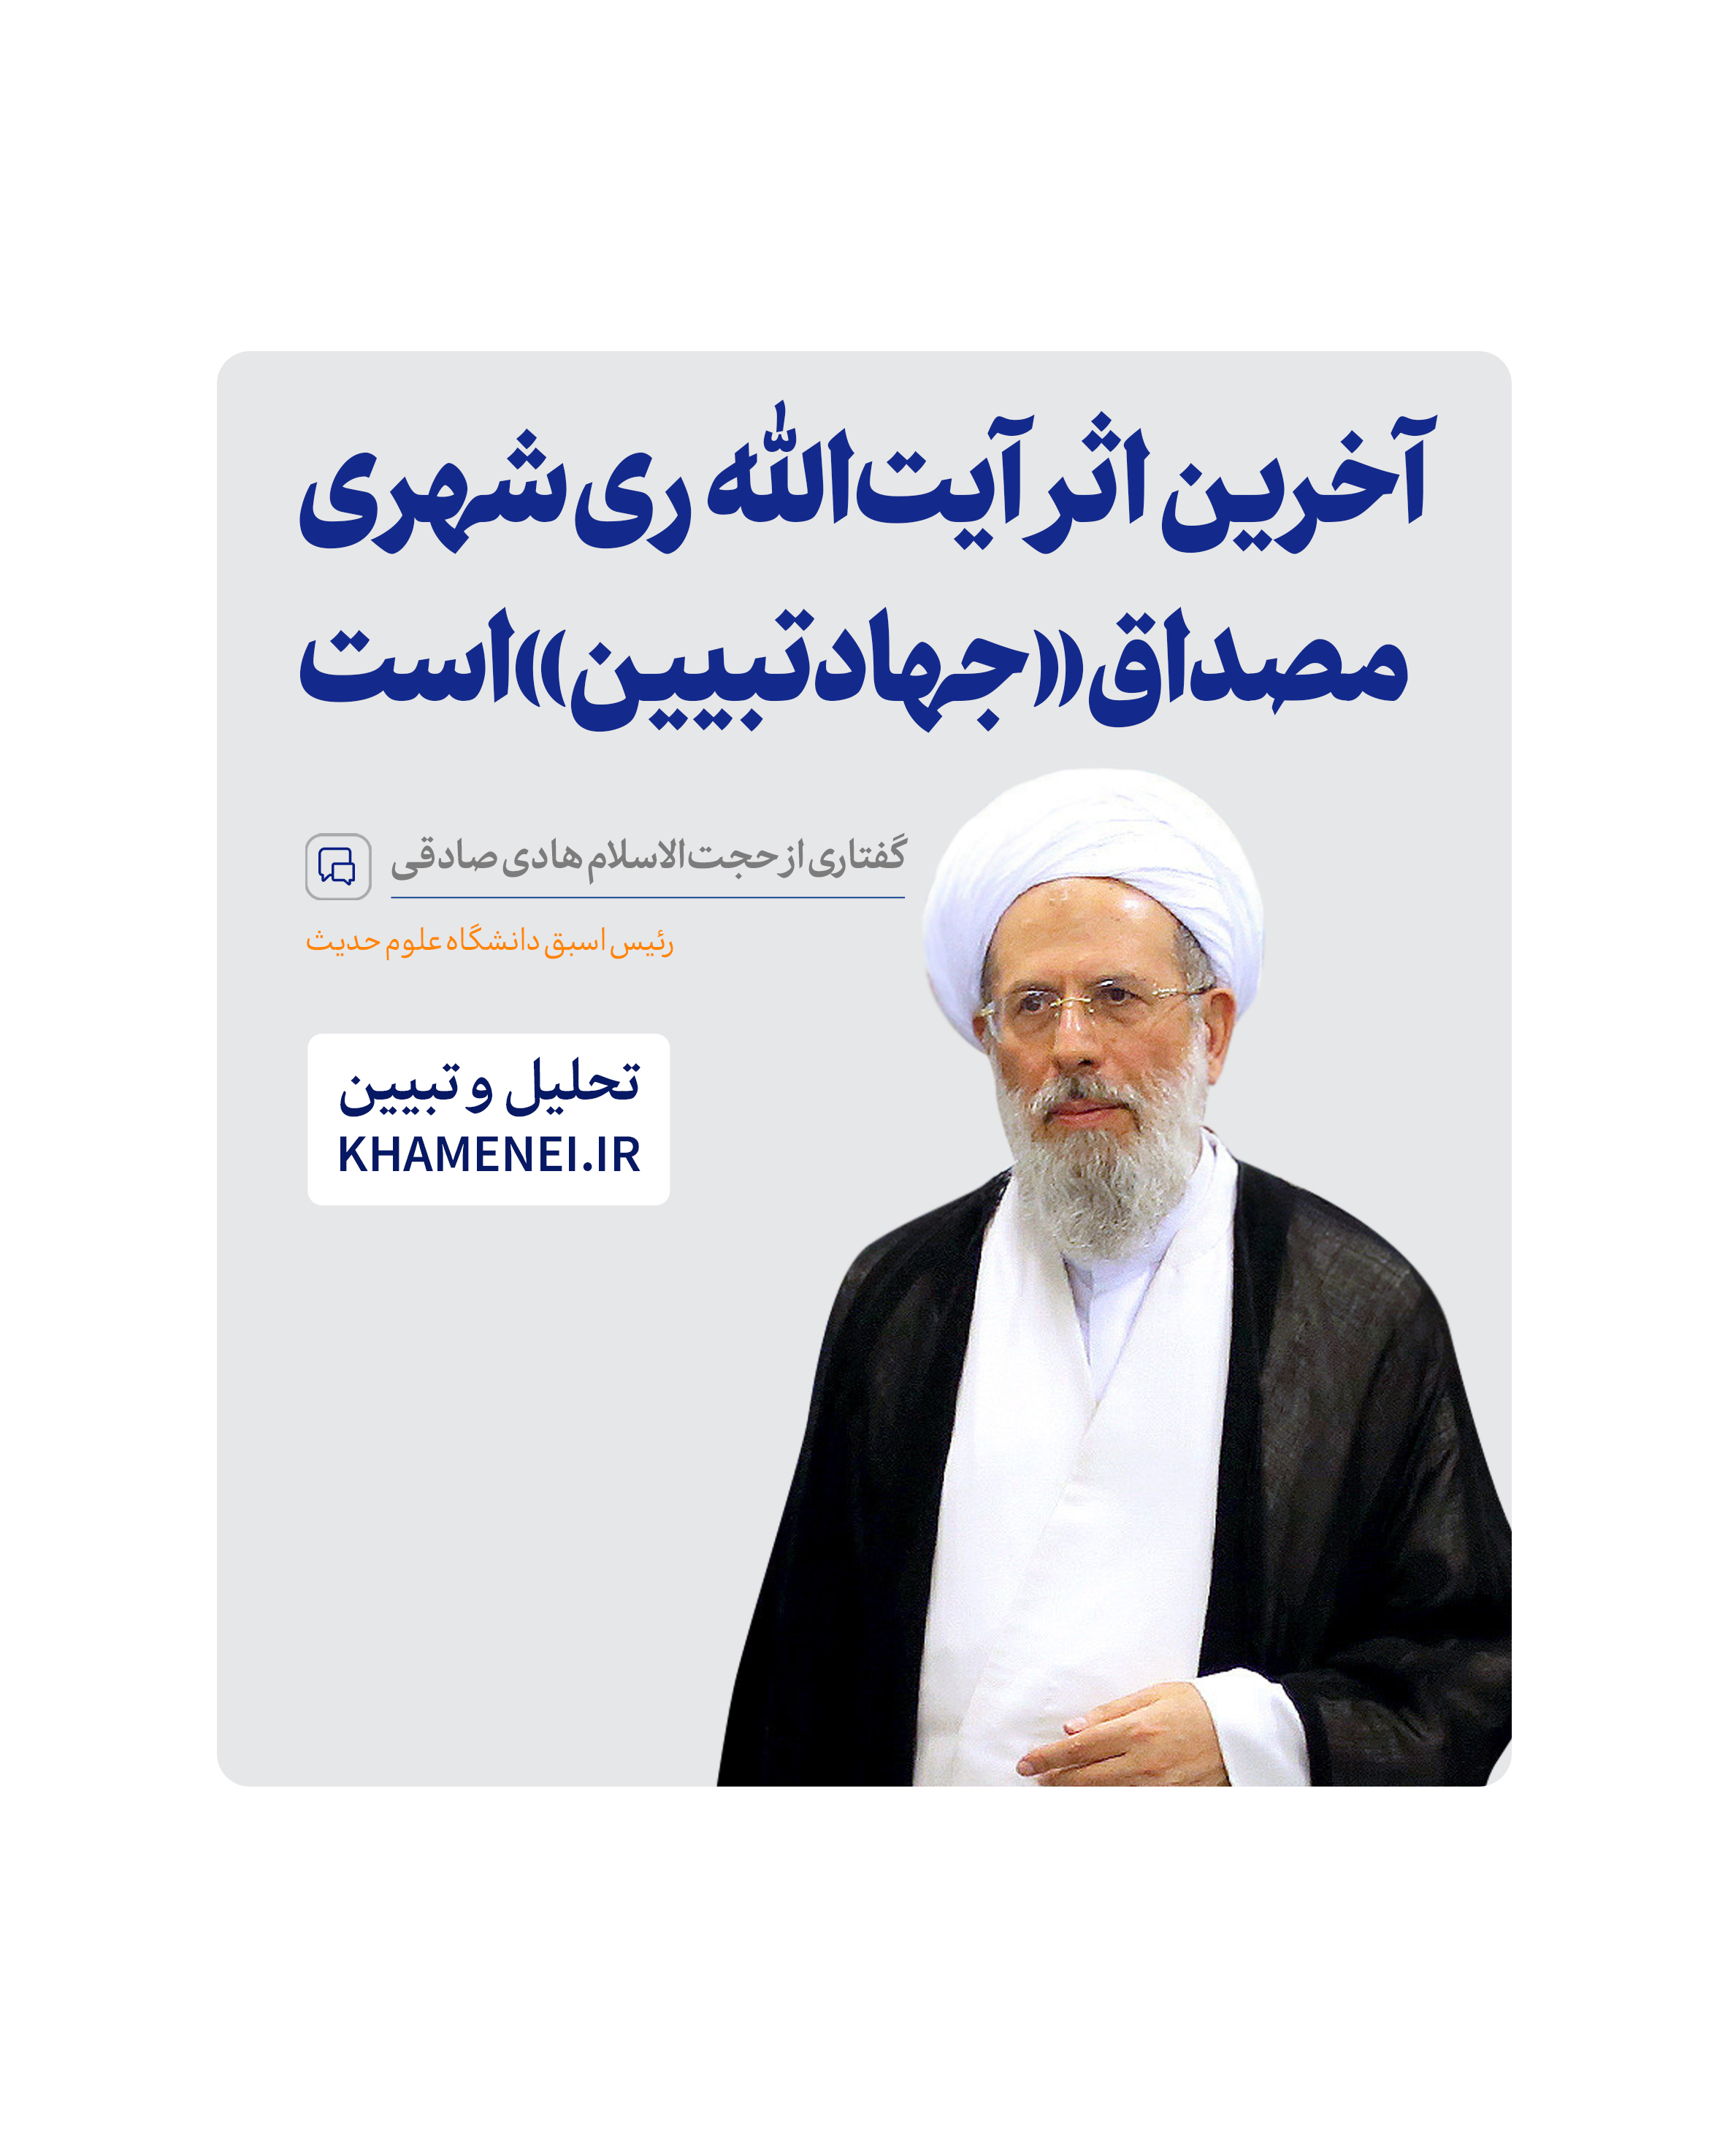 https://idc0-cdn0.khamenei.ir/ndata/news/49937/hadisadeghi.jpg